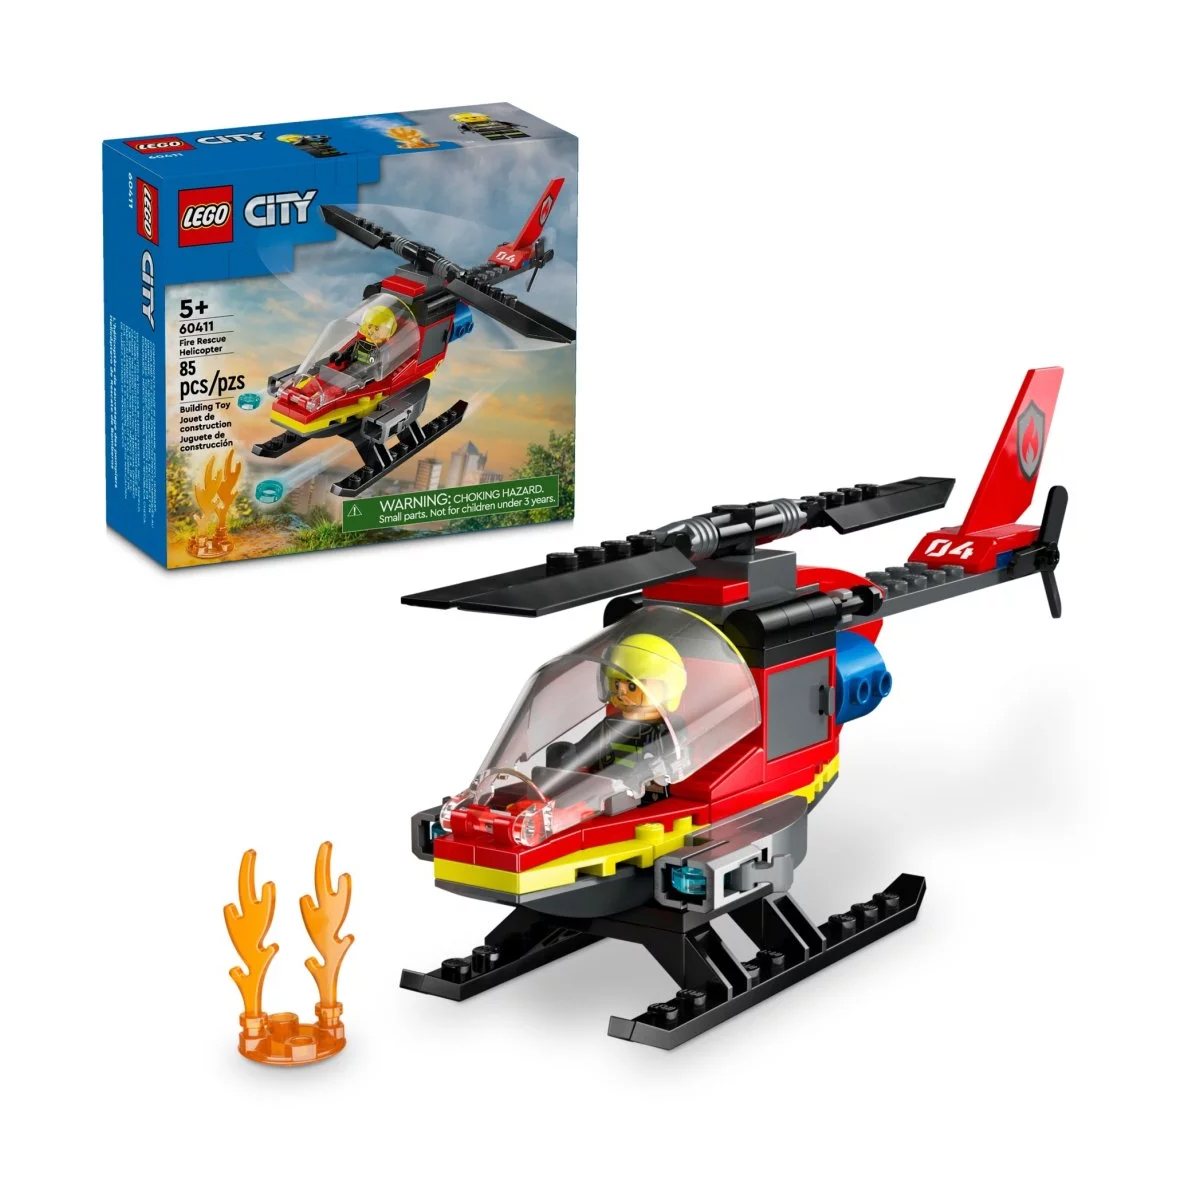 Конструктор Lego City Fire Rescue Helicopter 60411, 85 деталей конструктор lego city 60318 fire helicopter 53 дет